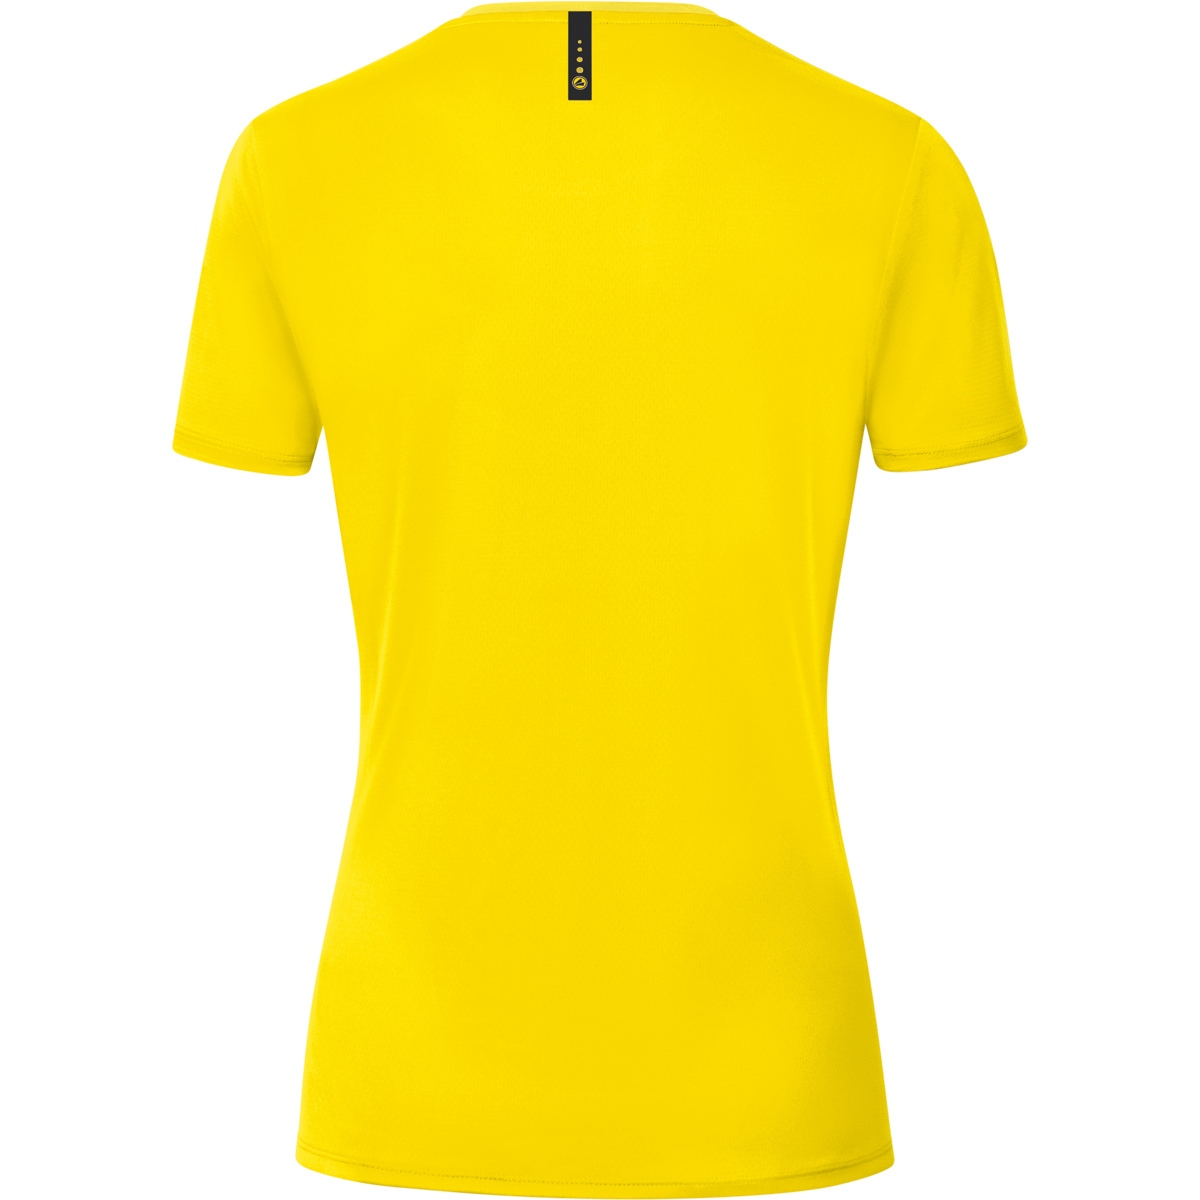 Damen, Champ 6120 citro/citro JAKO T-Shirt 36, 2.0 light, Gr.